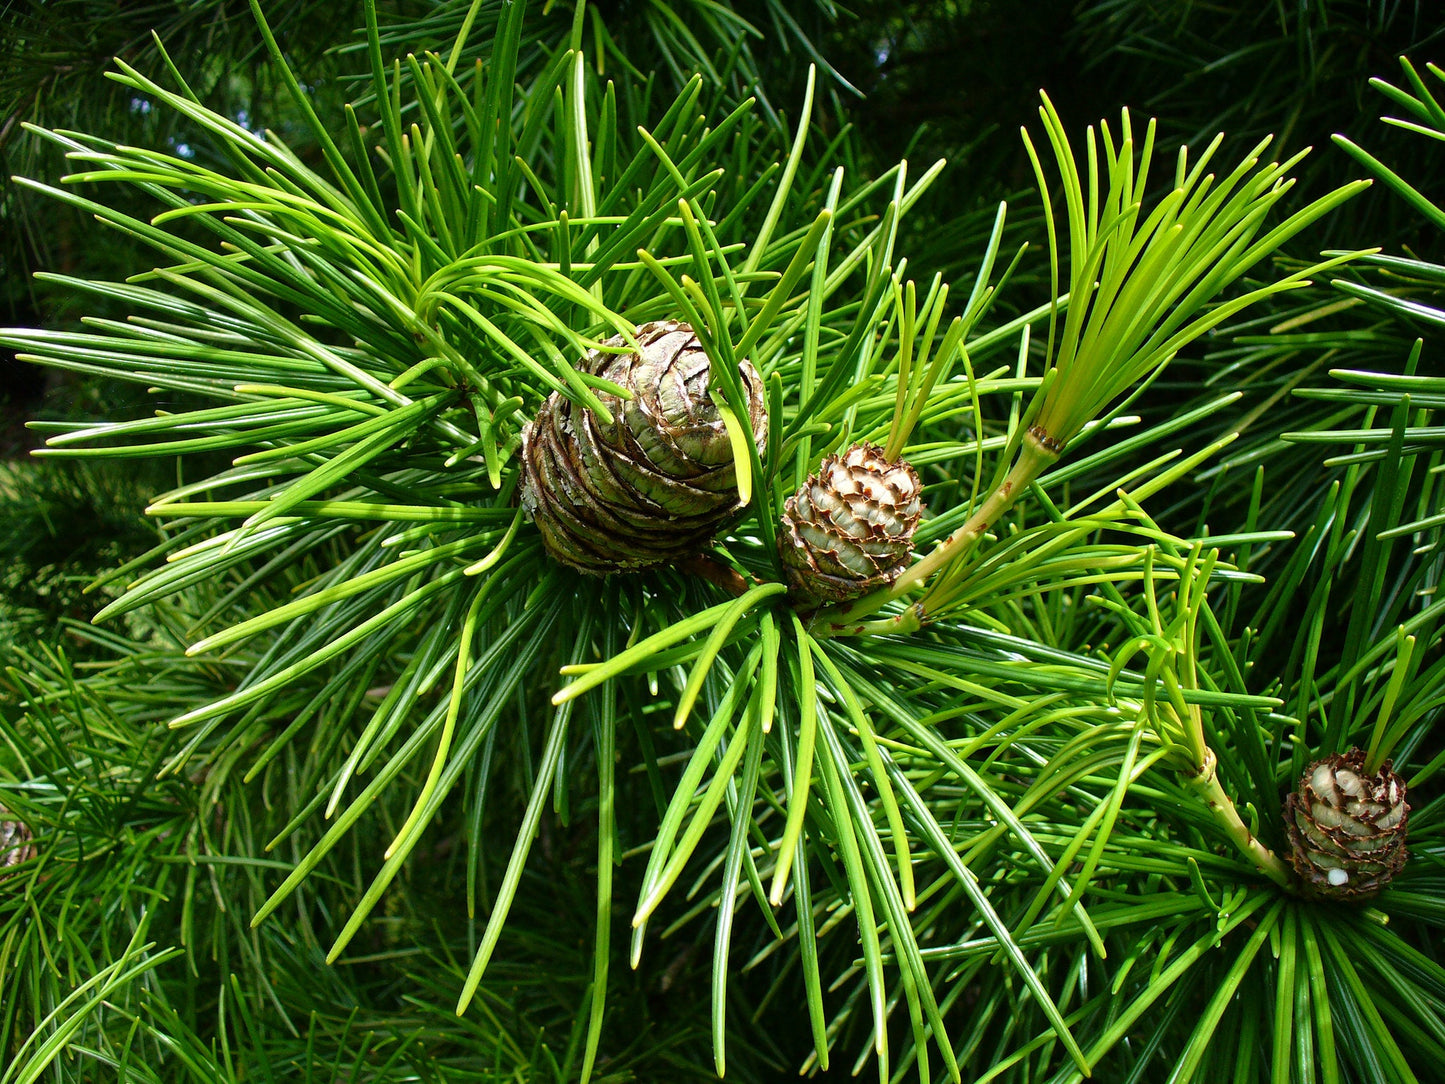 Japanese Umbrella Pine Sciadopitys verticillata 10 Seeds  USA Company